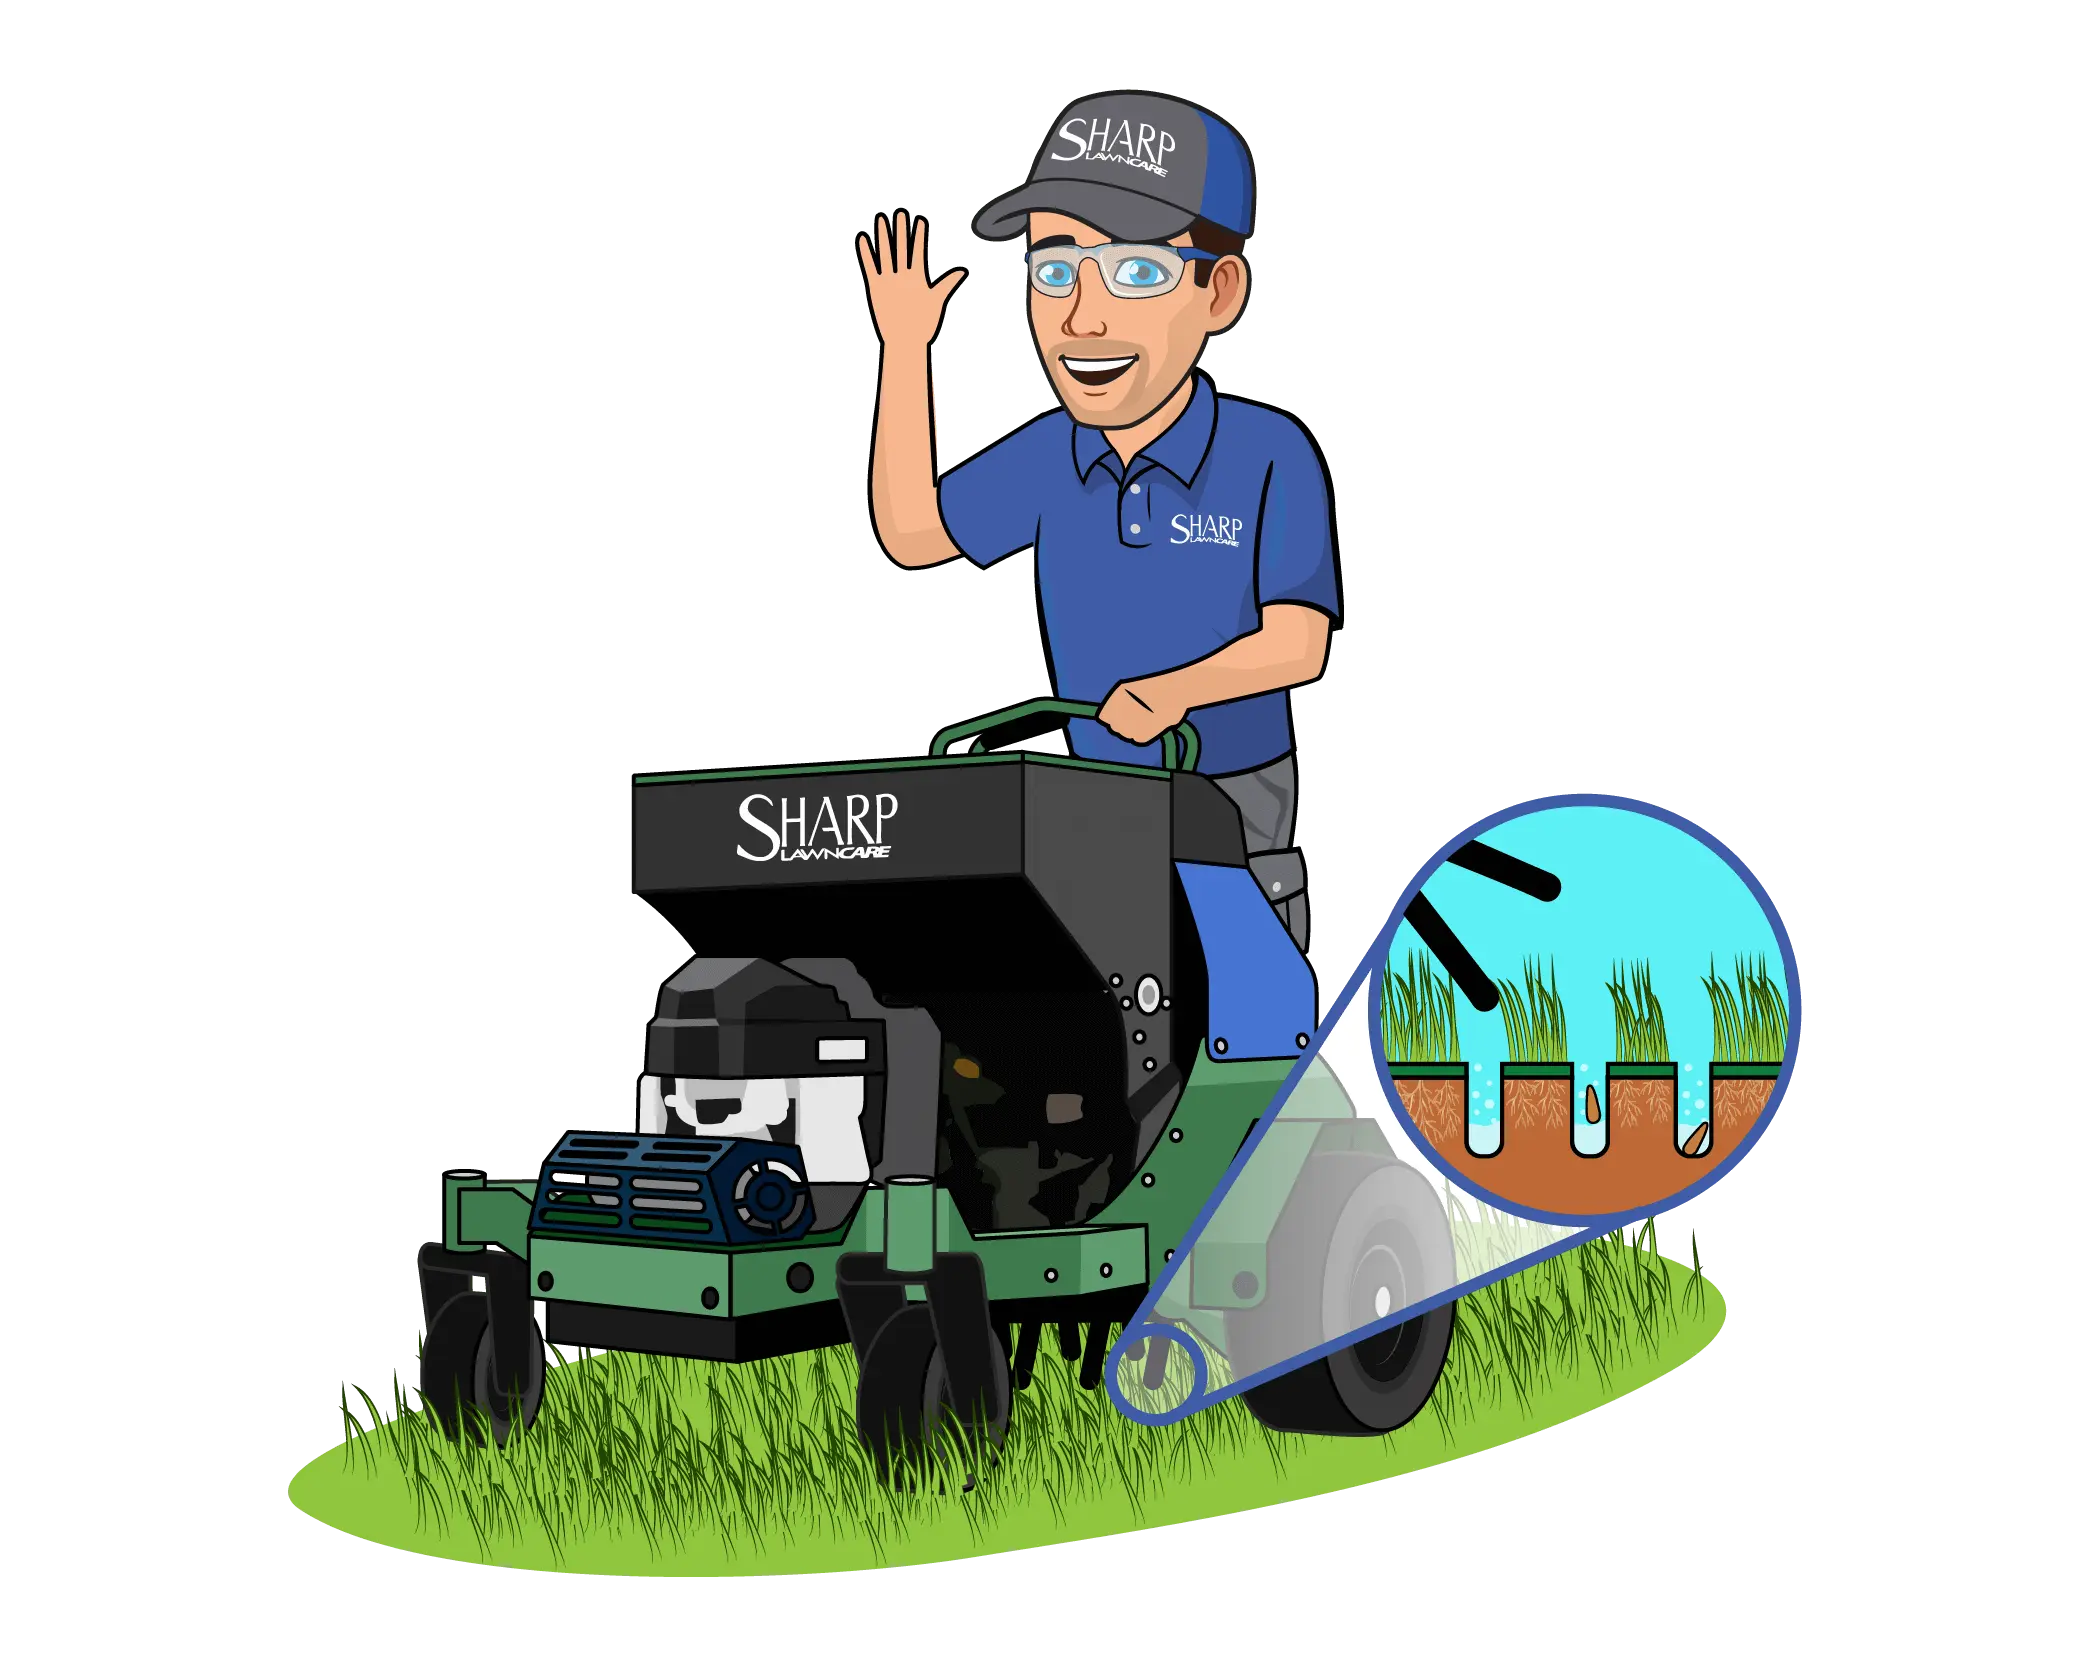 Sharp Lawn Care mascot using hand spreader for lawn fertilization.